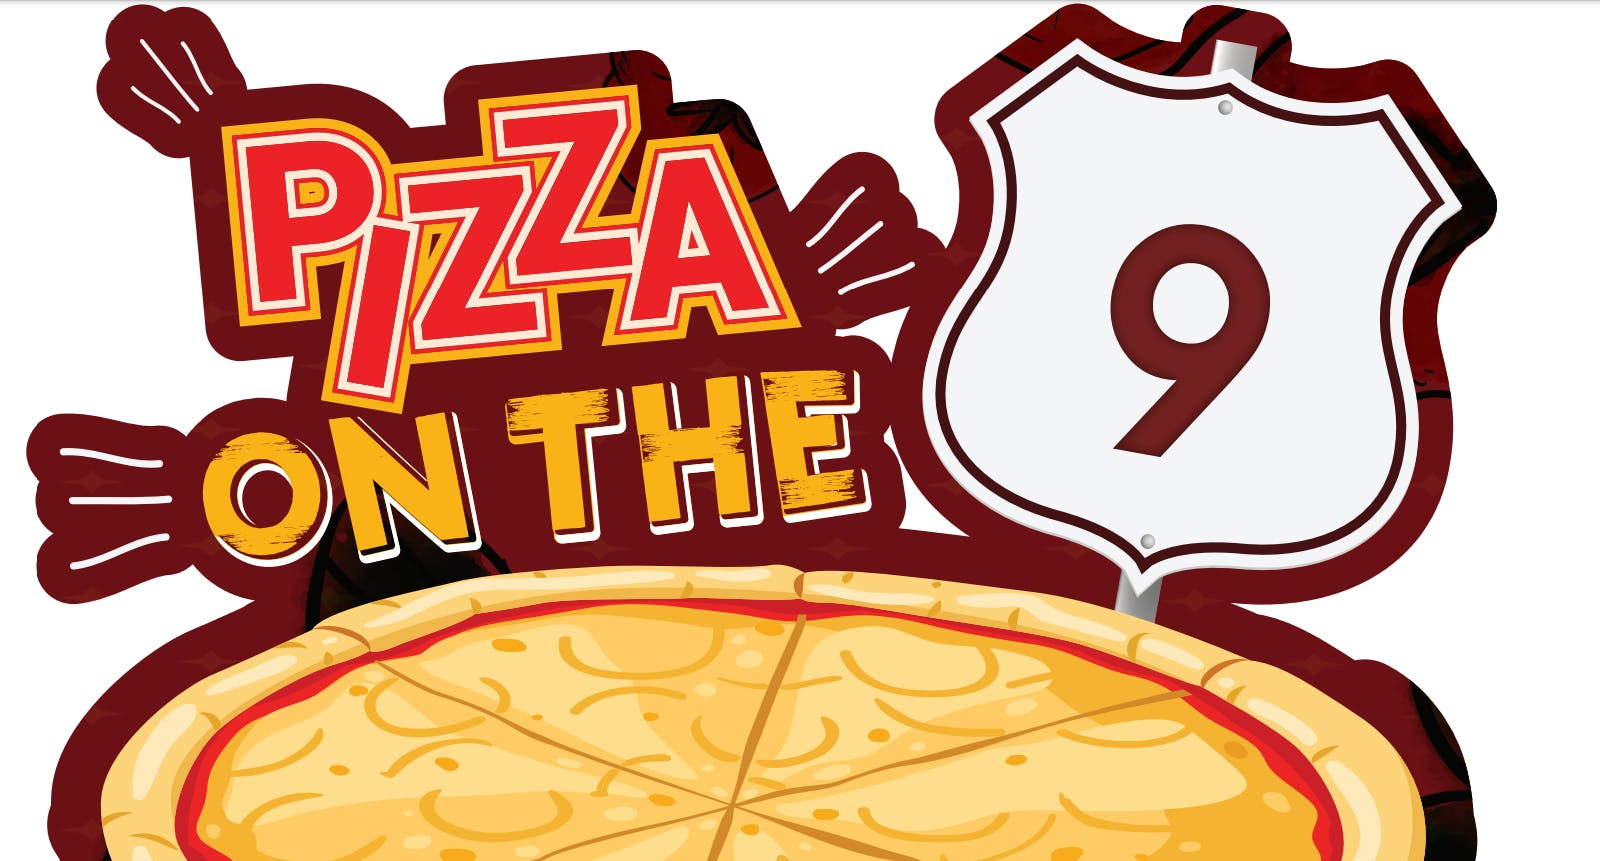 Pizza on the 9 hero